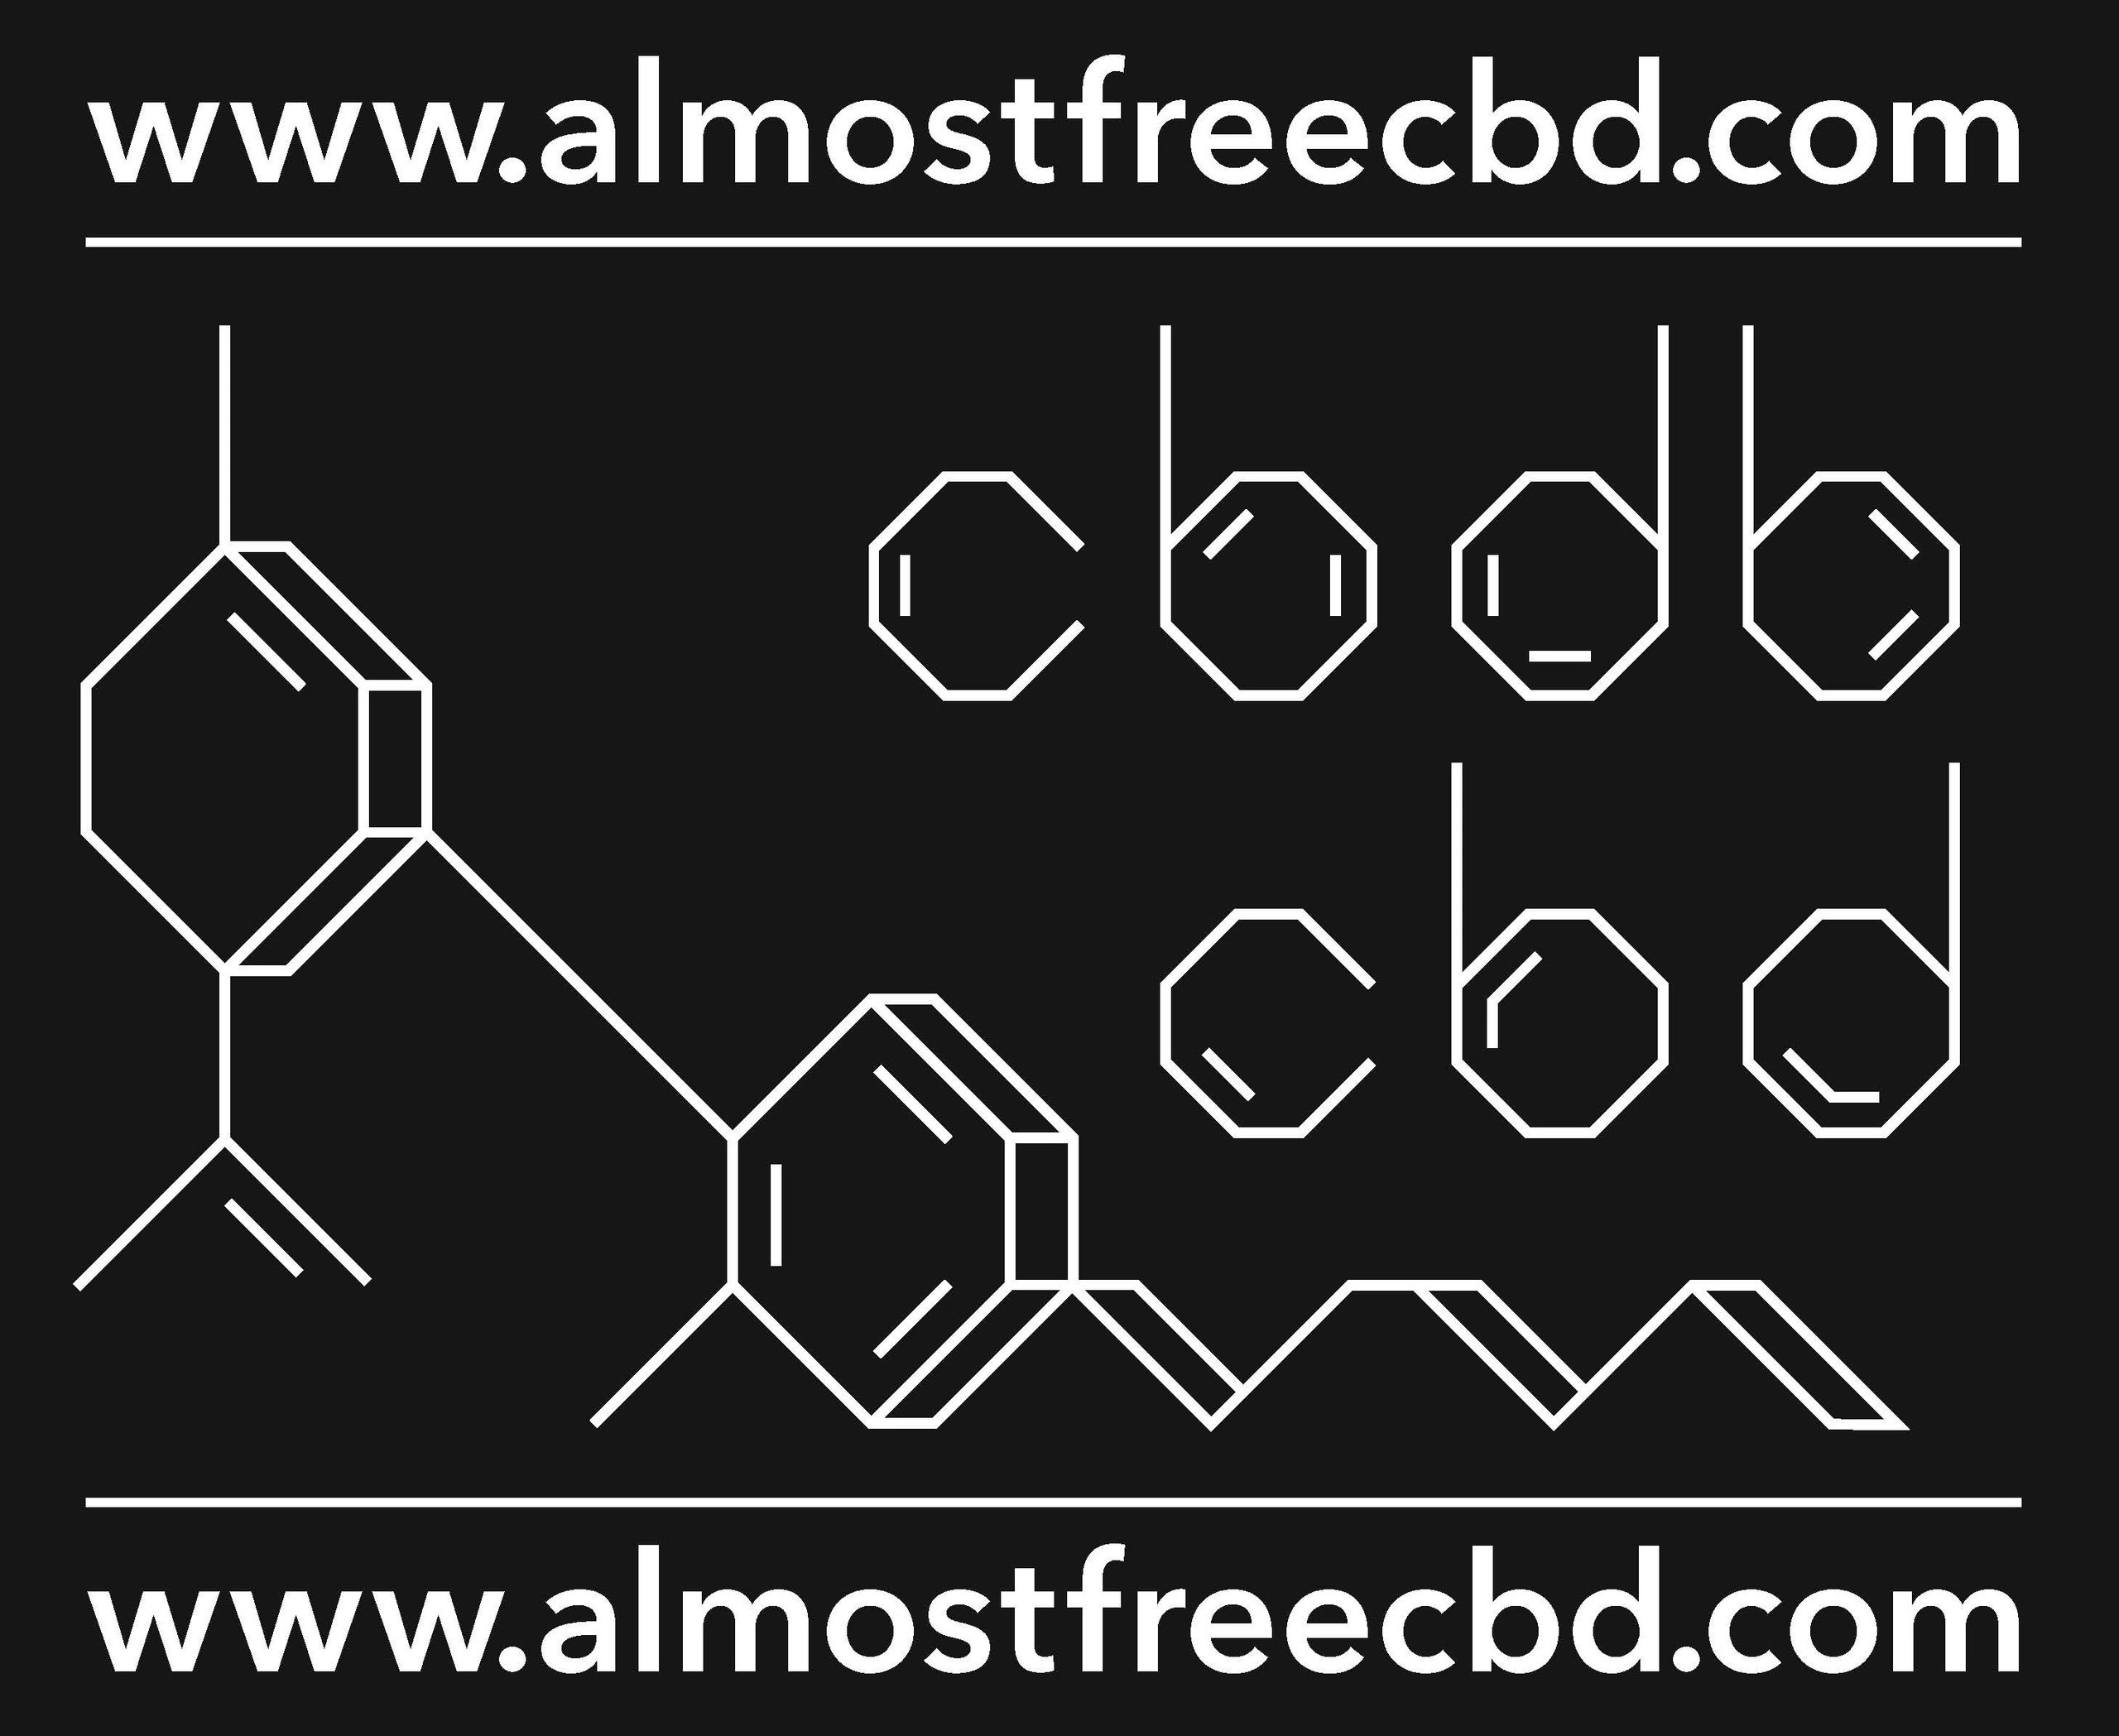 CBDB CBD
CBD
Isolate Powder
Full Spectrum Distillate
Affordable
High Quality
All Natural
USA Made
